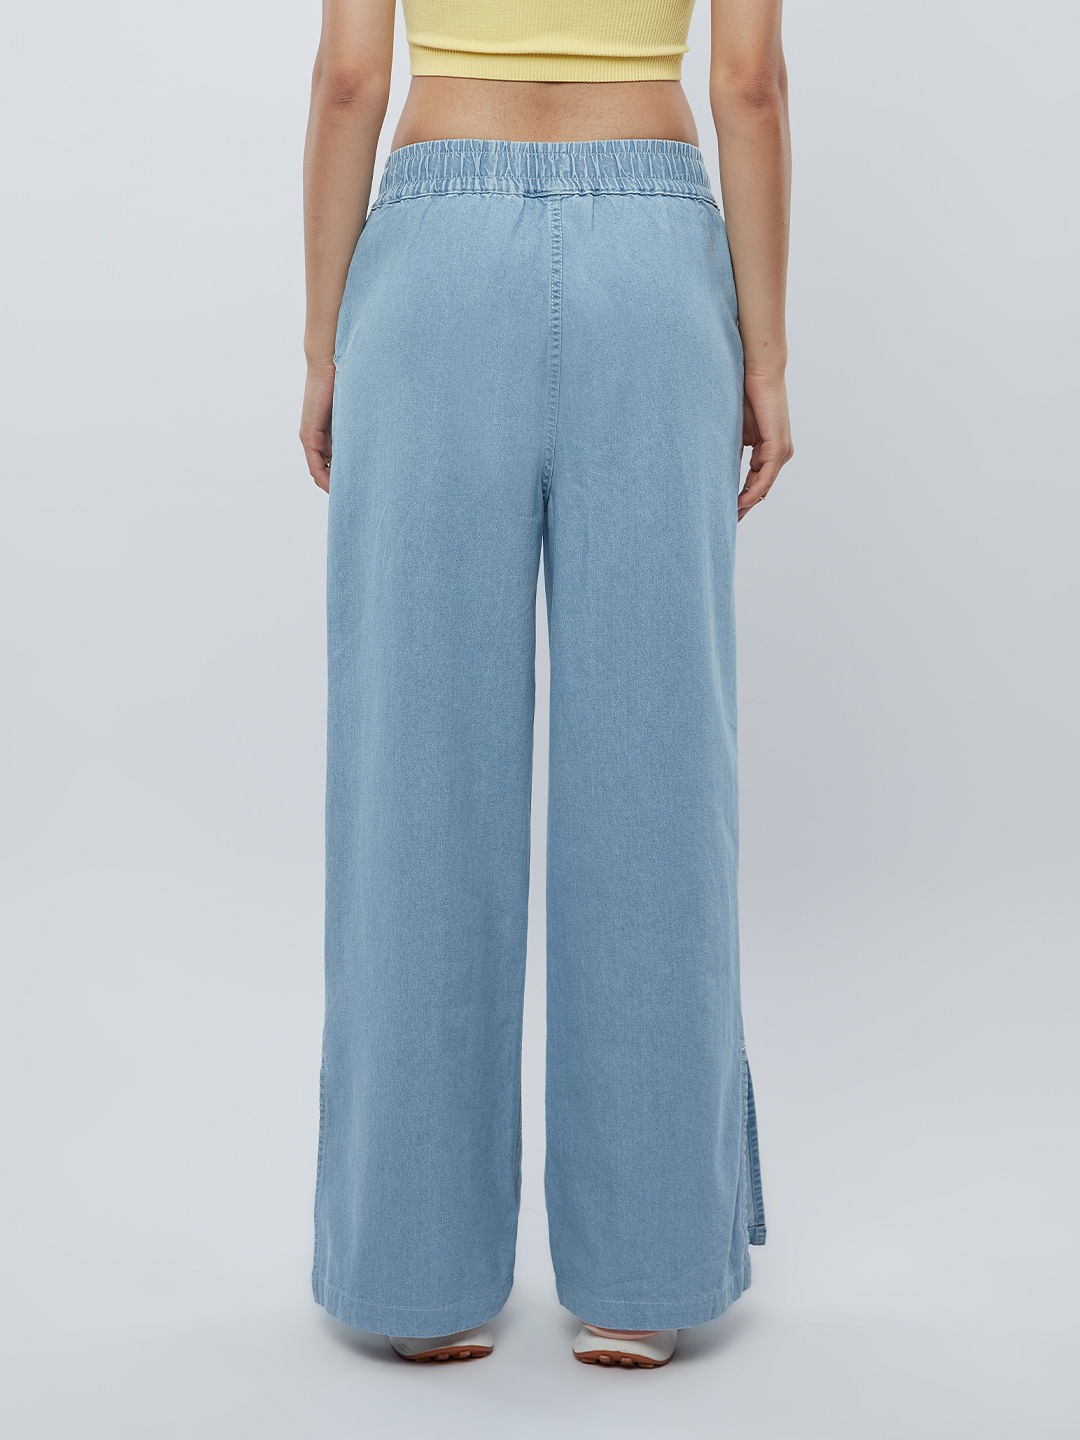 Buy Solids: Azure Blue Women's Flared Pants Online